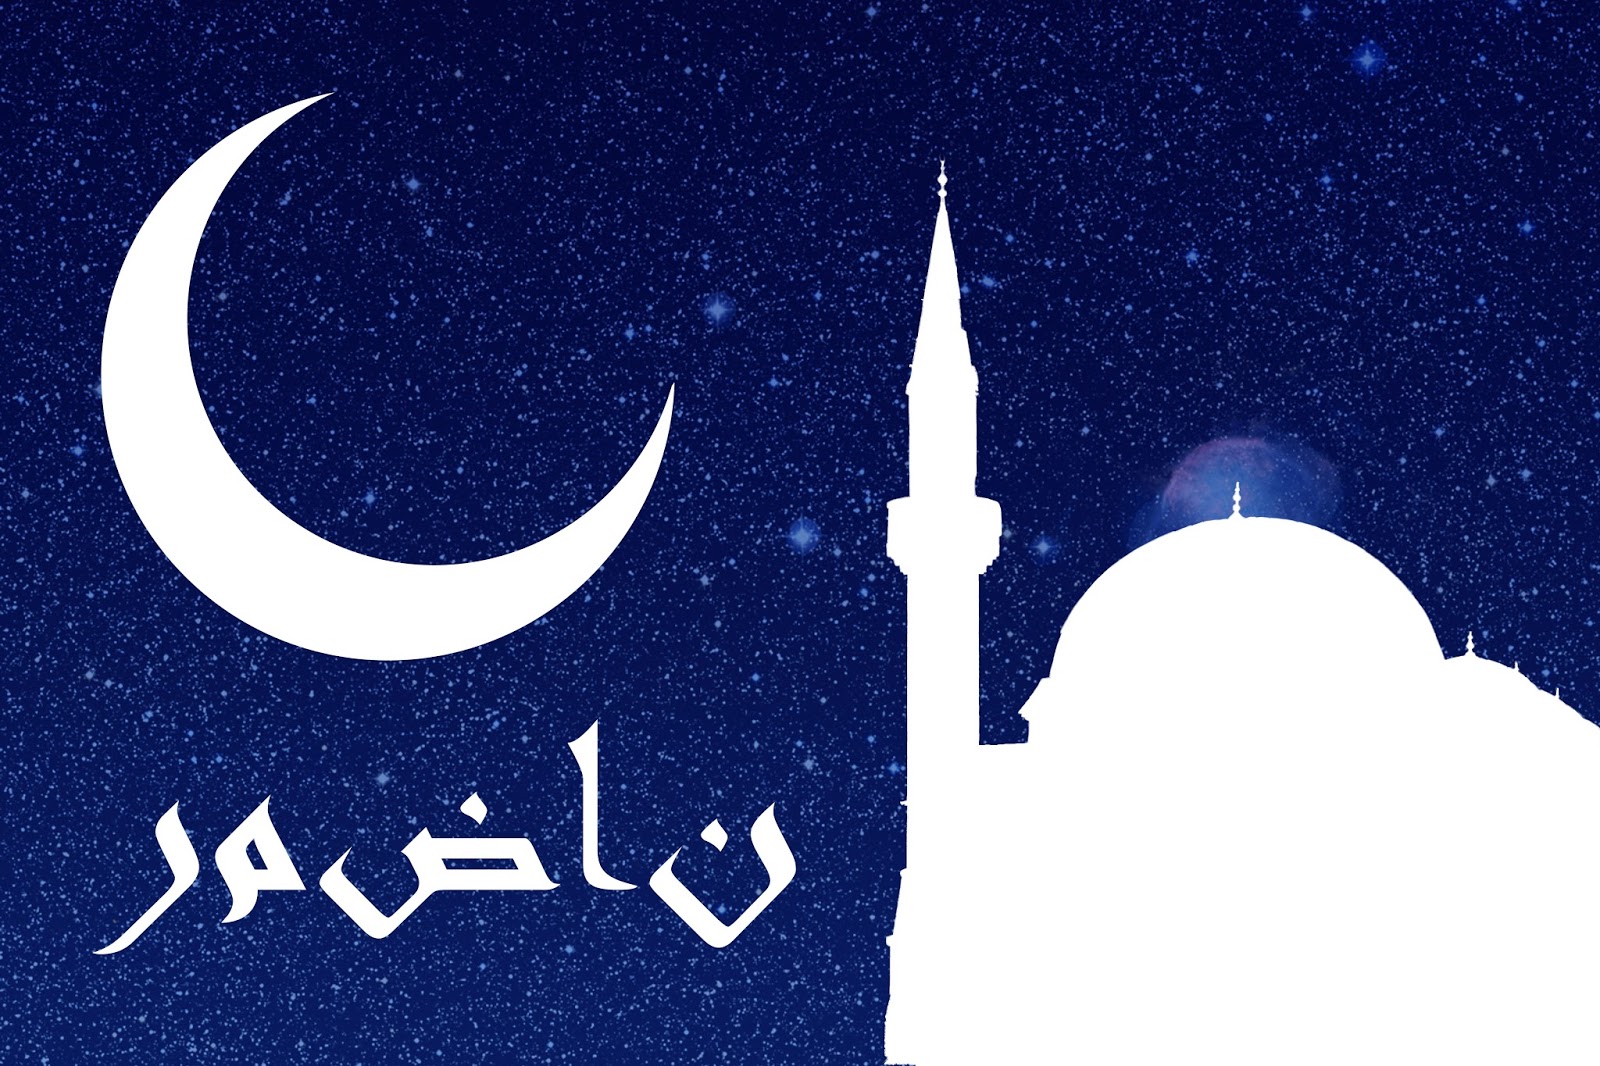 ramadan-mubarak-2019-wallpapers-messages-wishes-greetings-nobitas-world